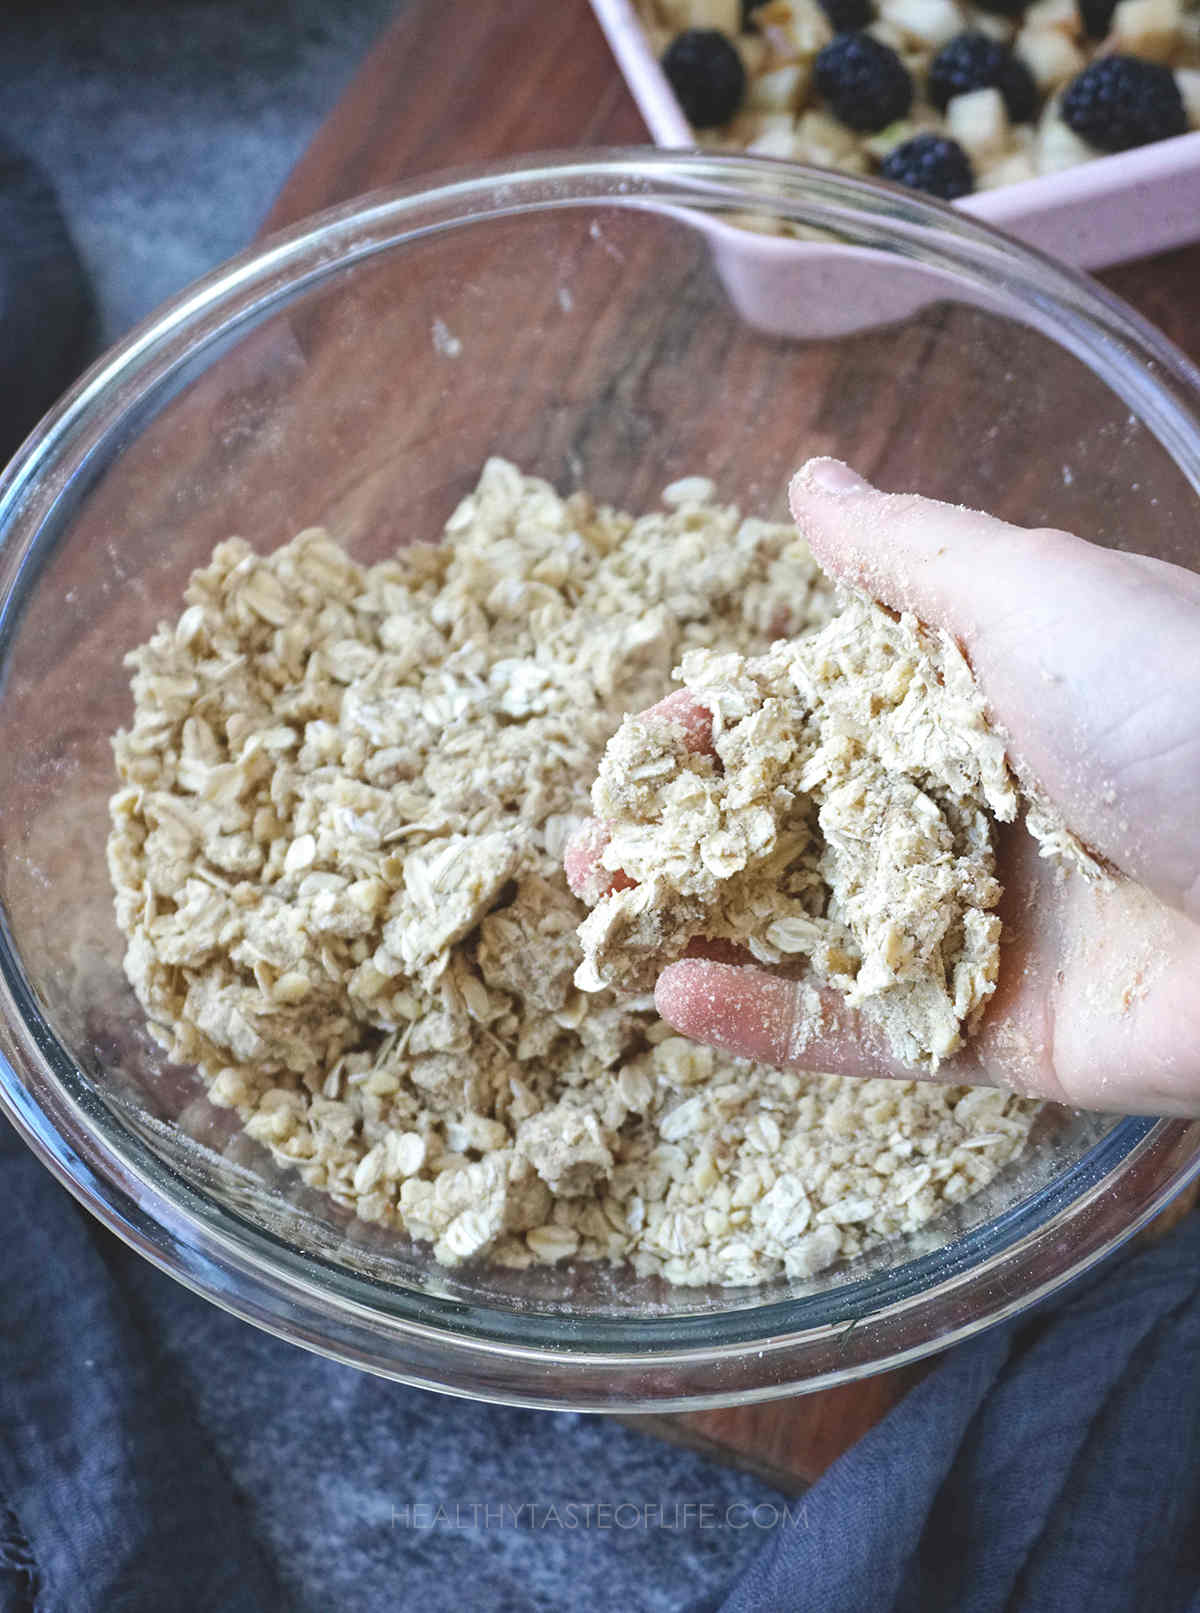 Making clumpy oat crumb topping.